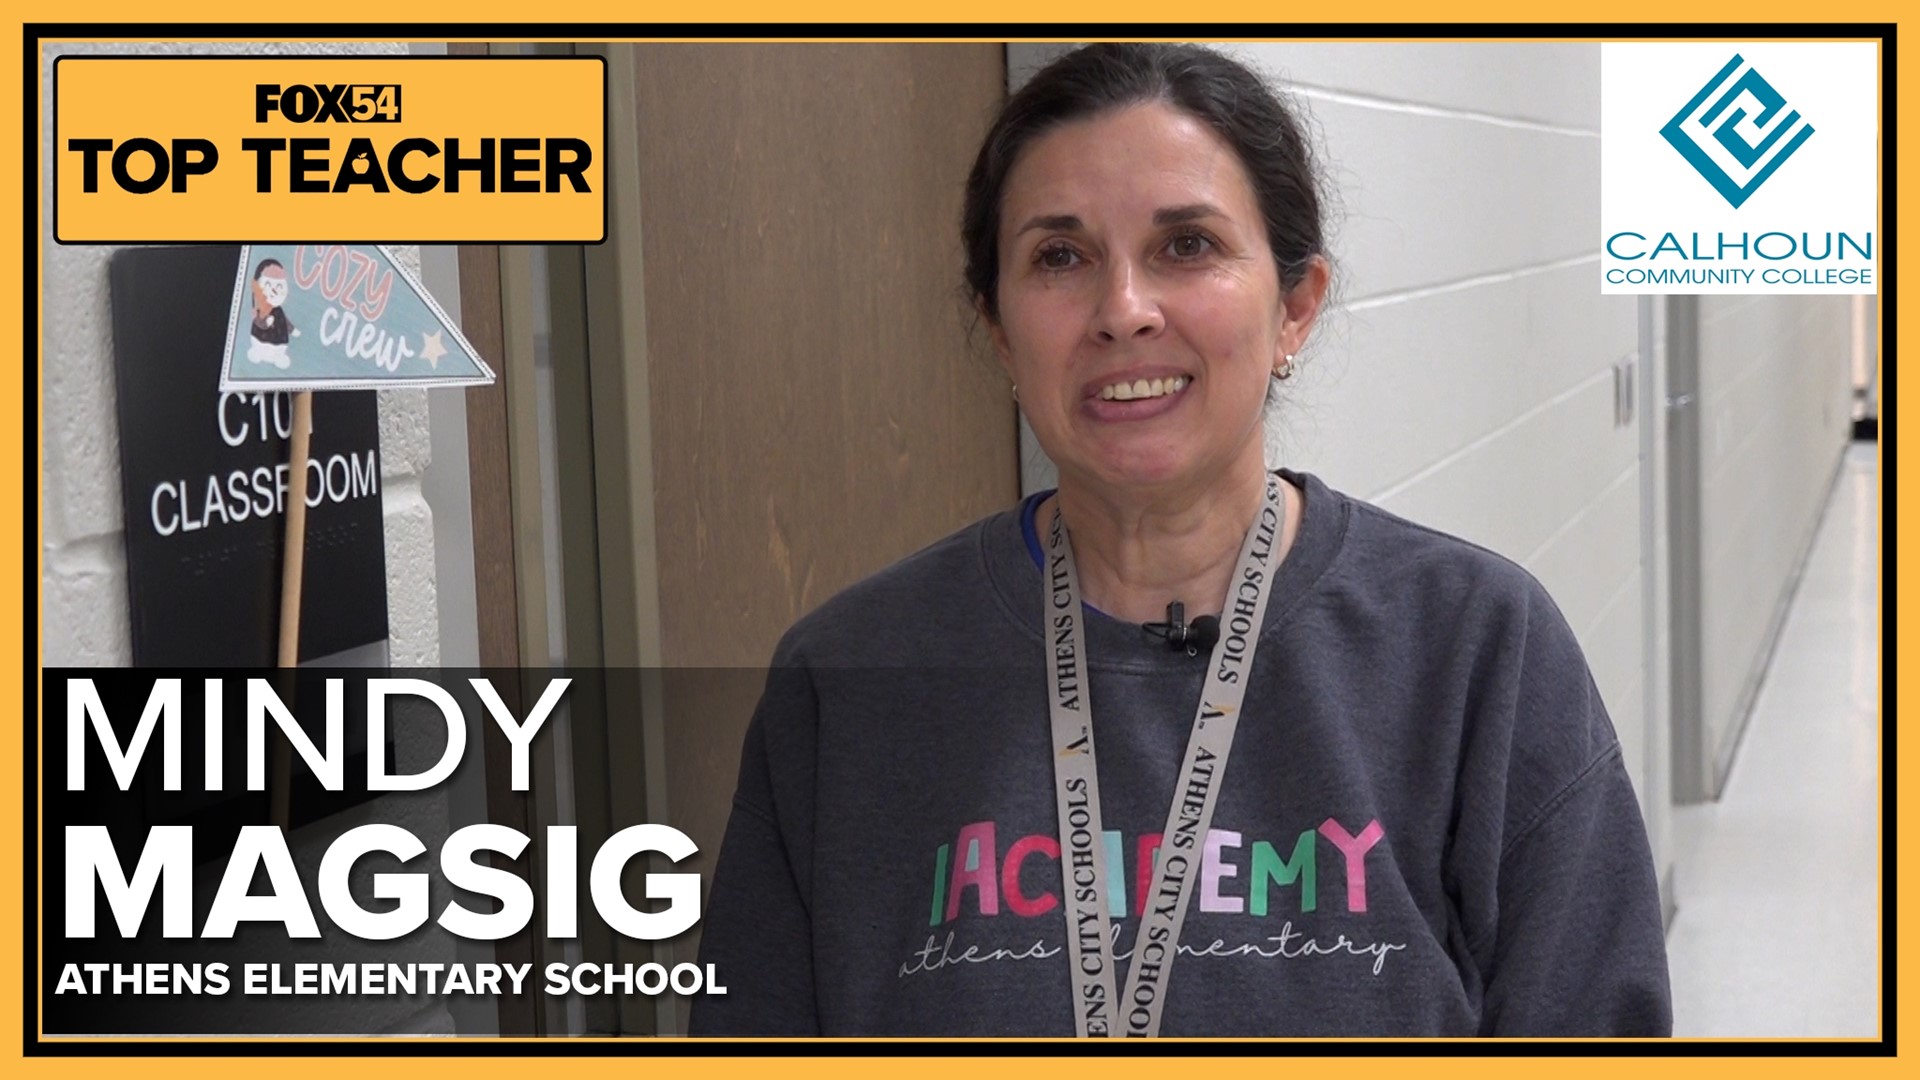 Mindy Magsig has been selected as a Top Teacher